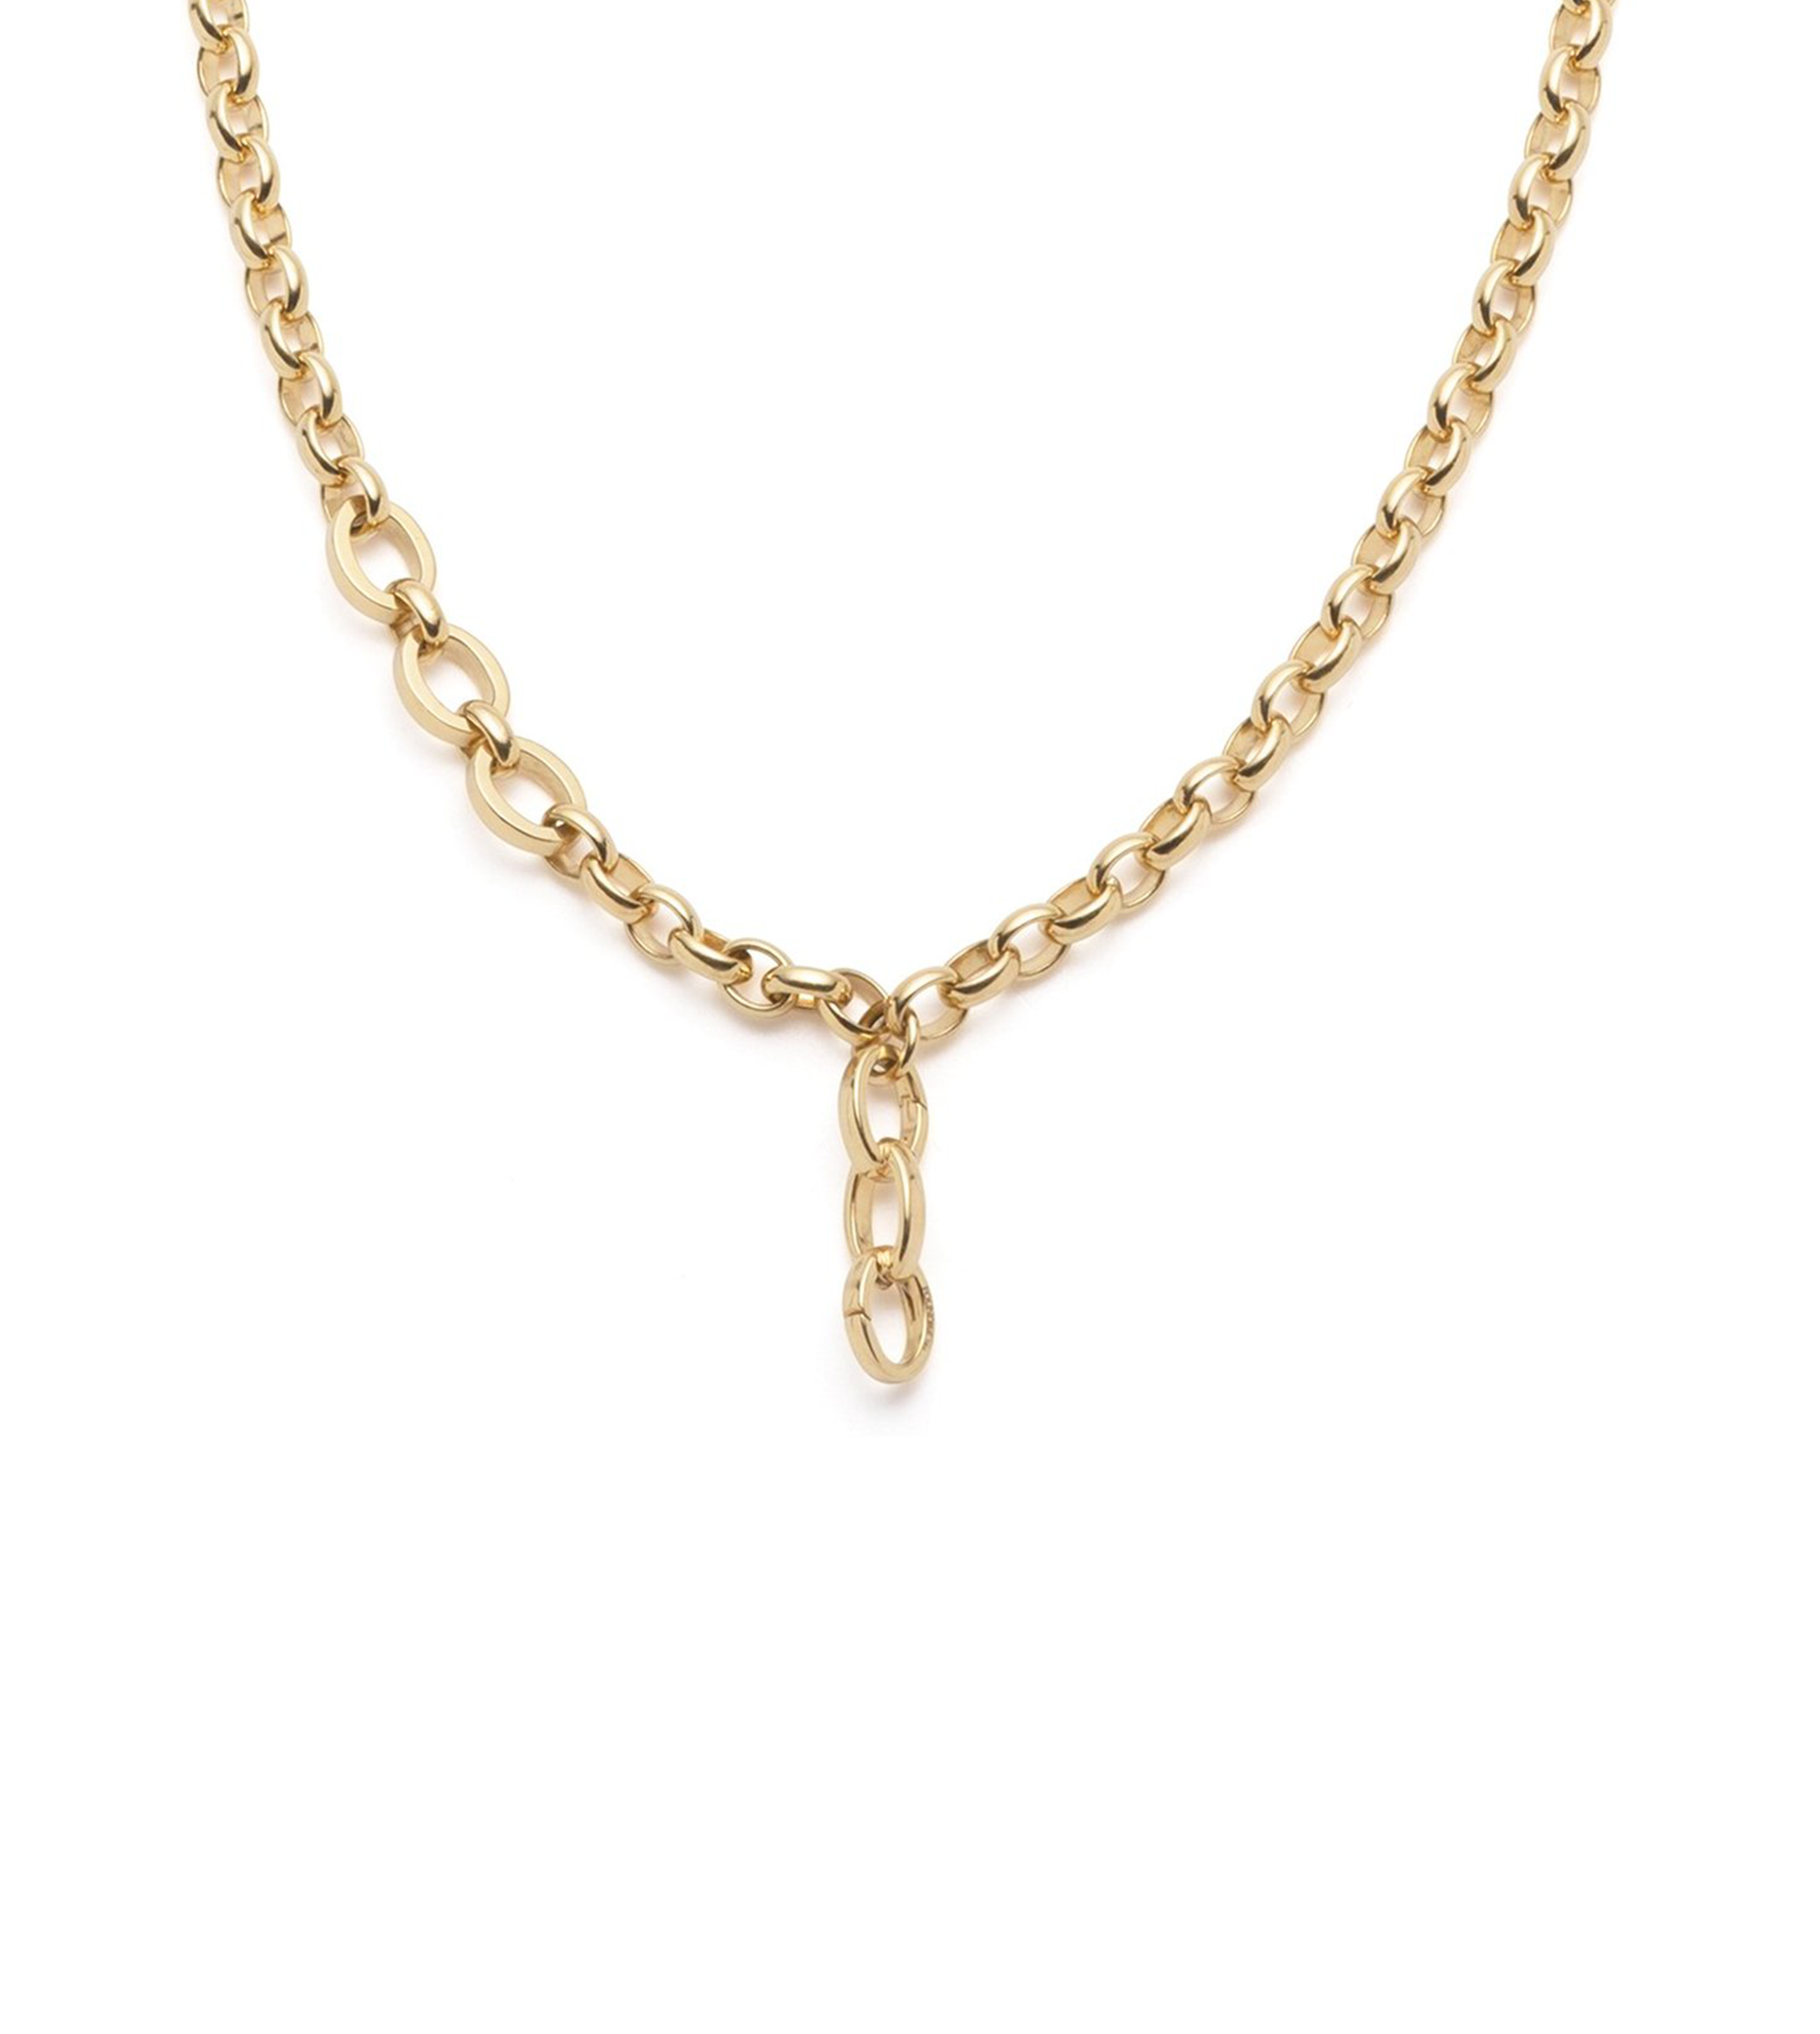 HSWALSH 9ct Gold Necklace Necklet Neck Let Extender Safety Chain